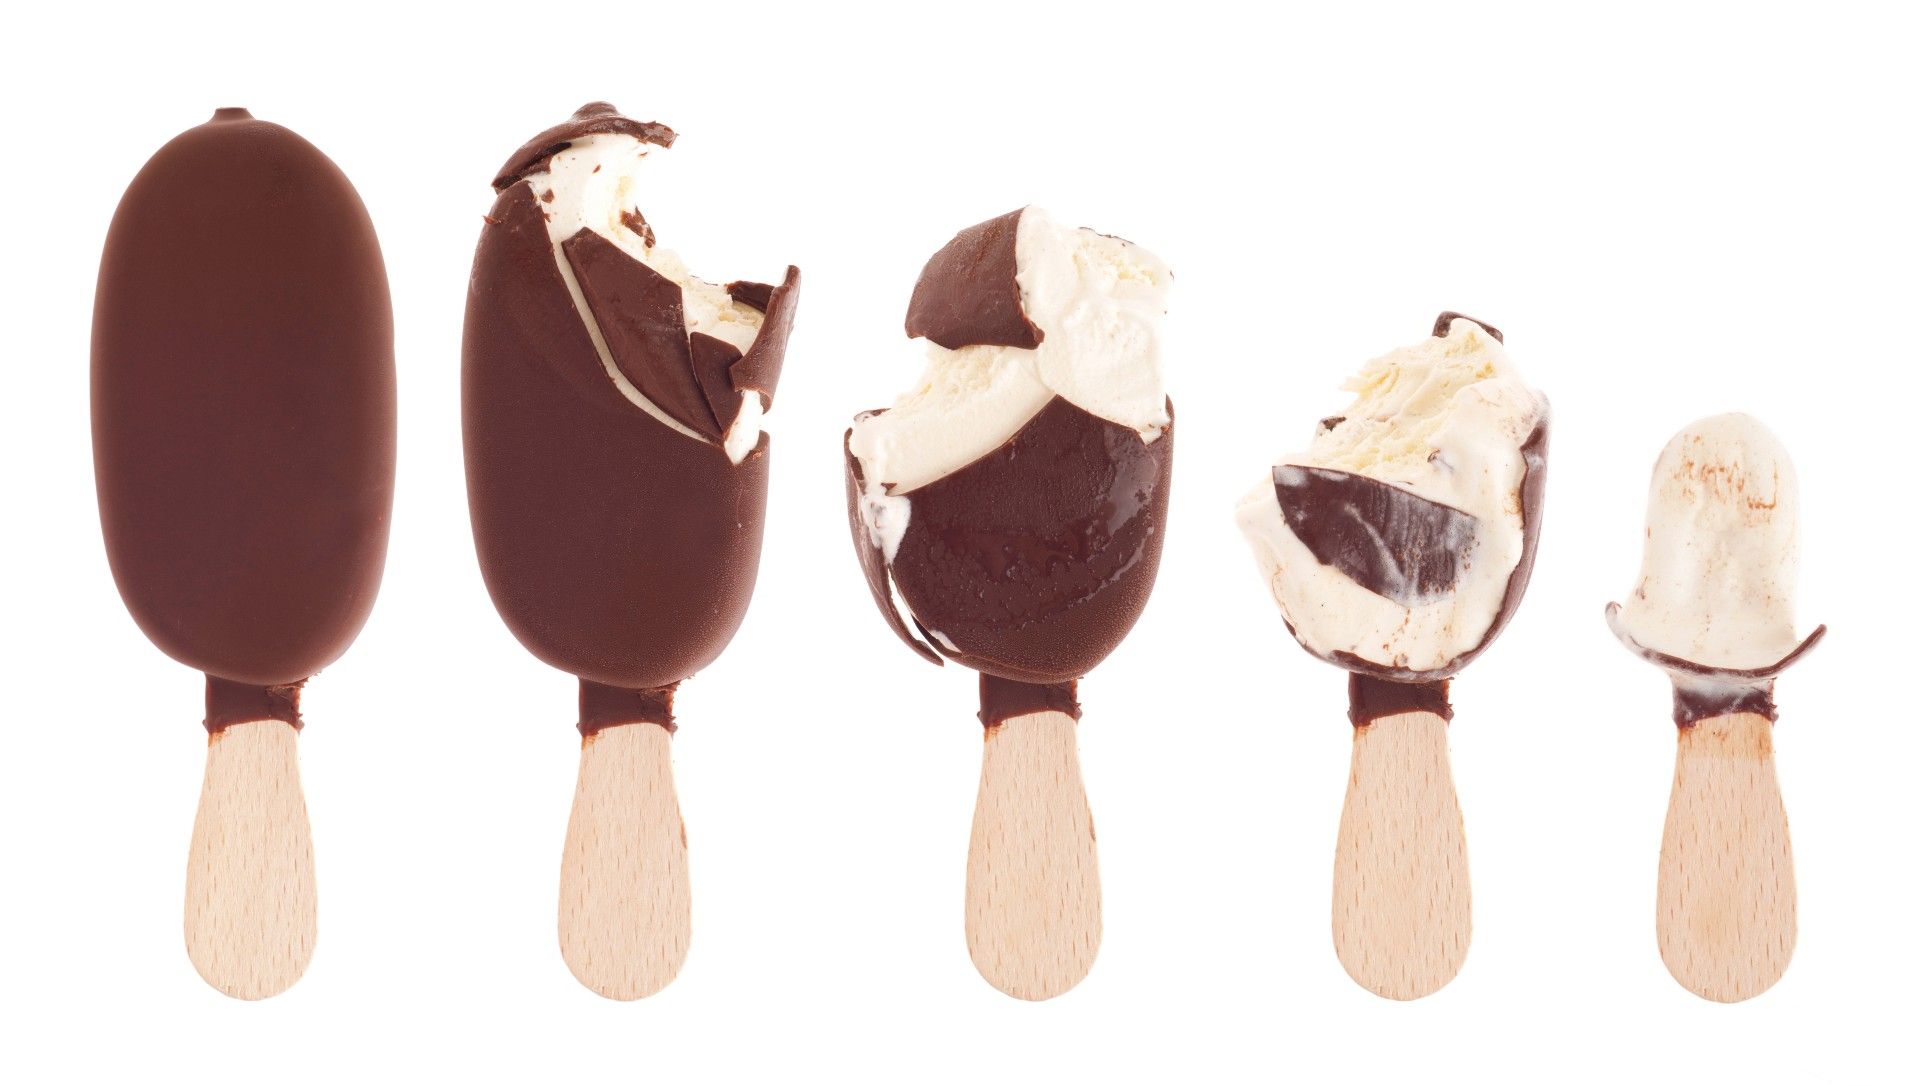 Chocolate-covered vanilla ice cream bars in various states of being eaten - milk chocolate